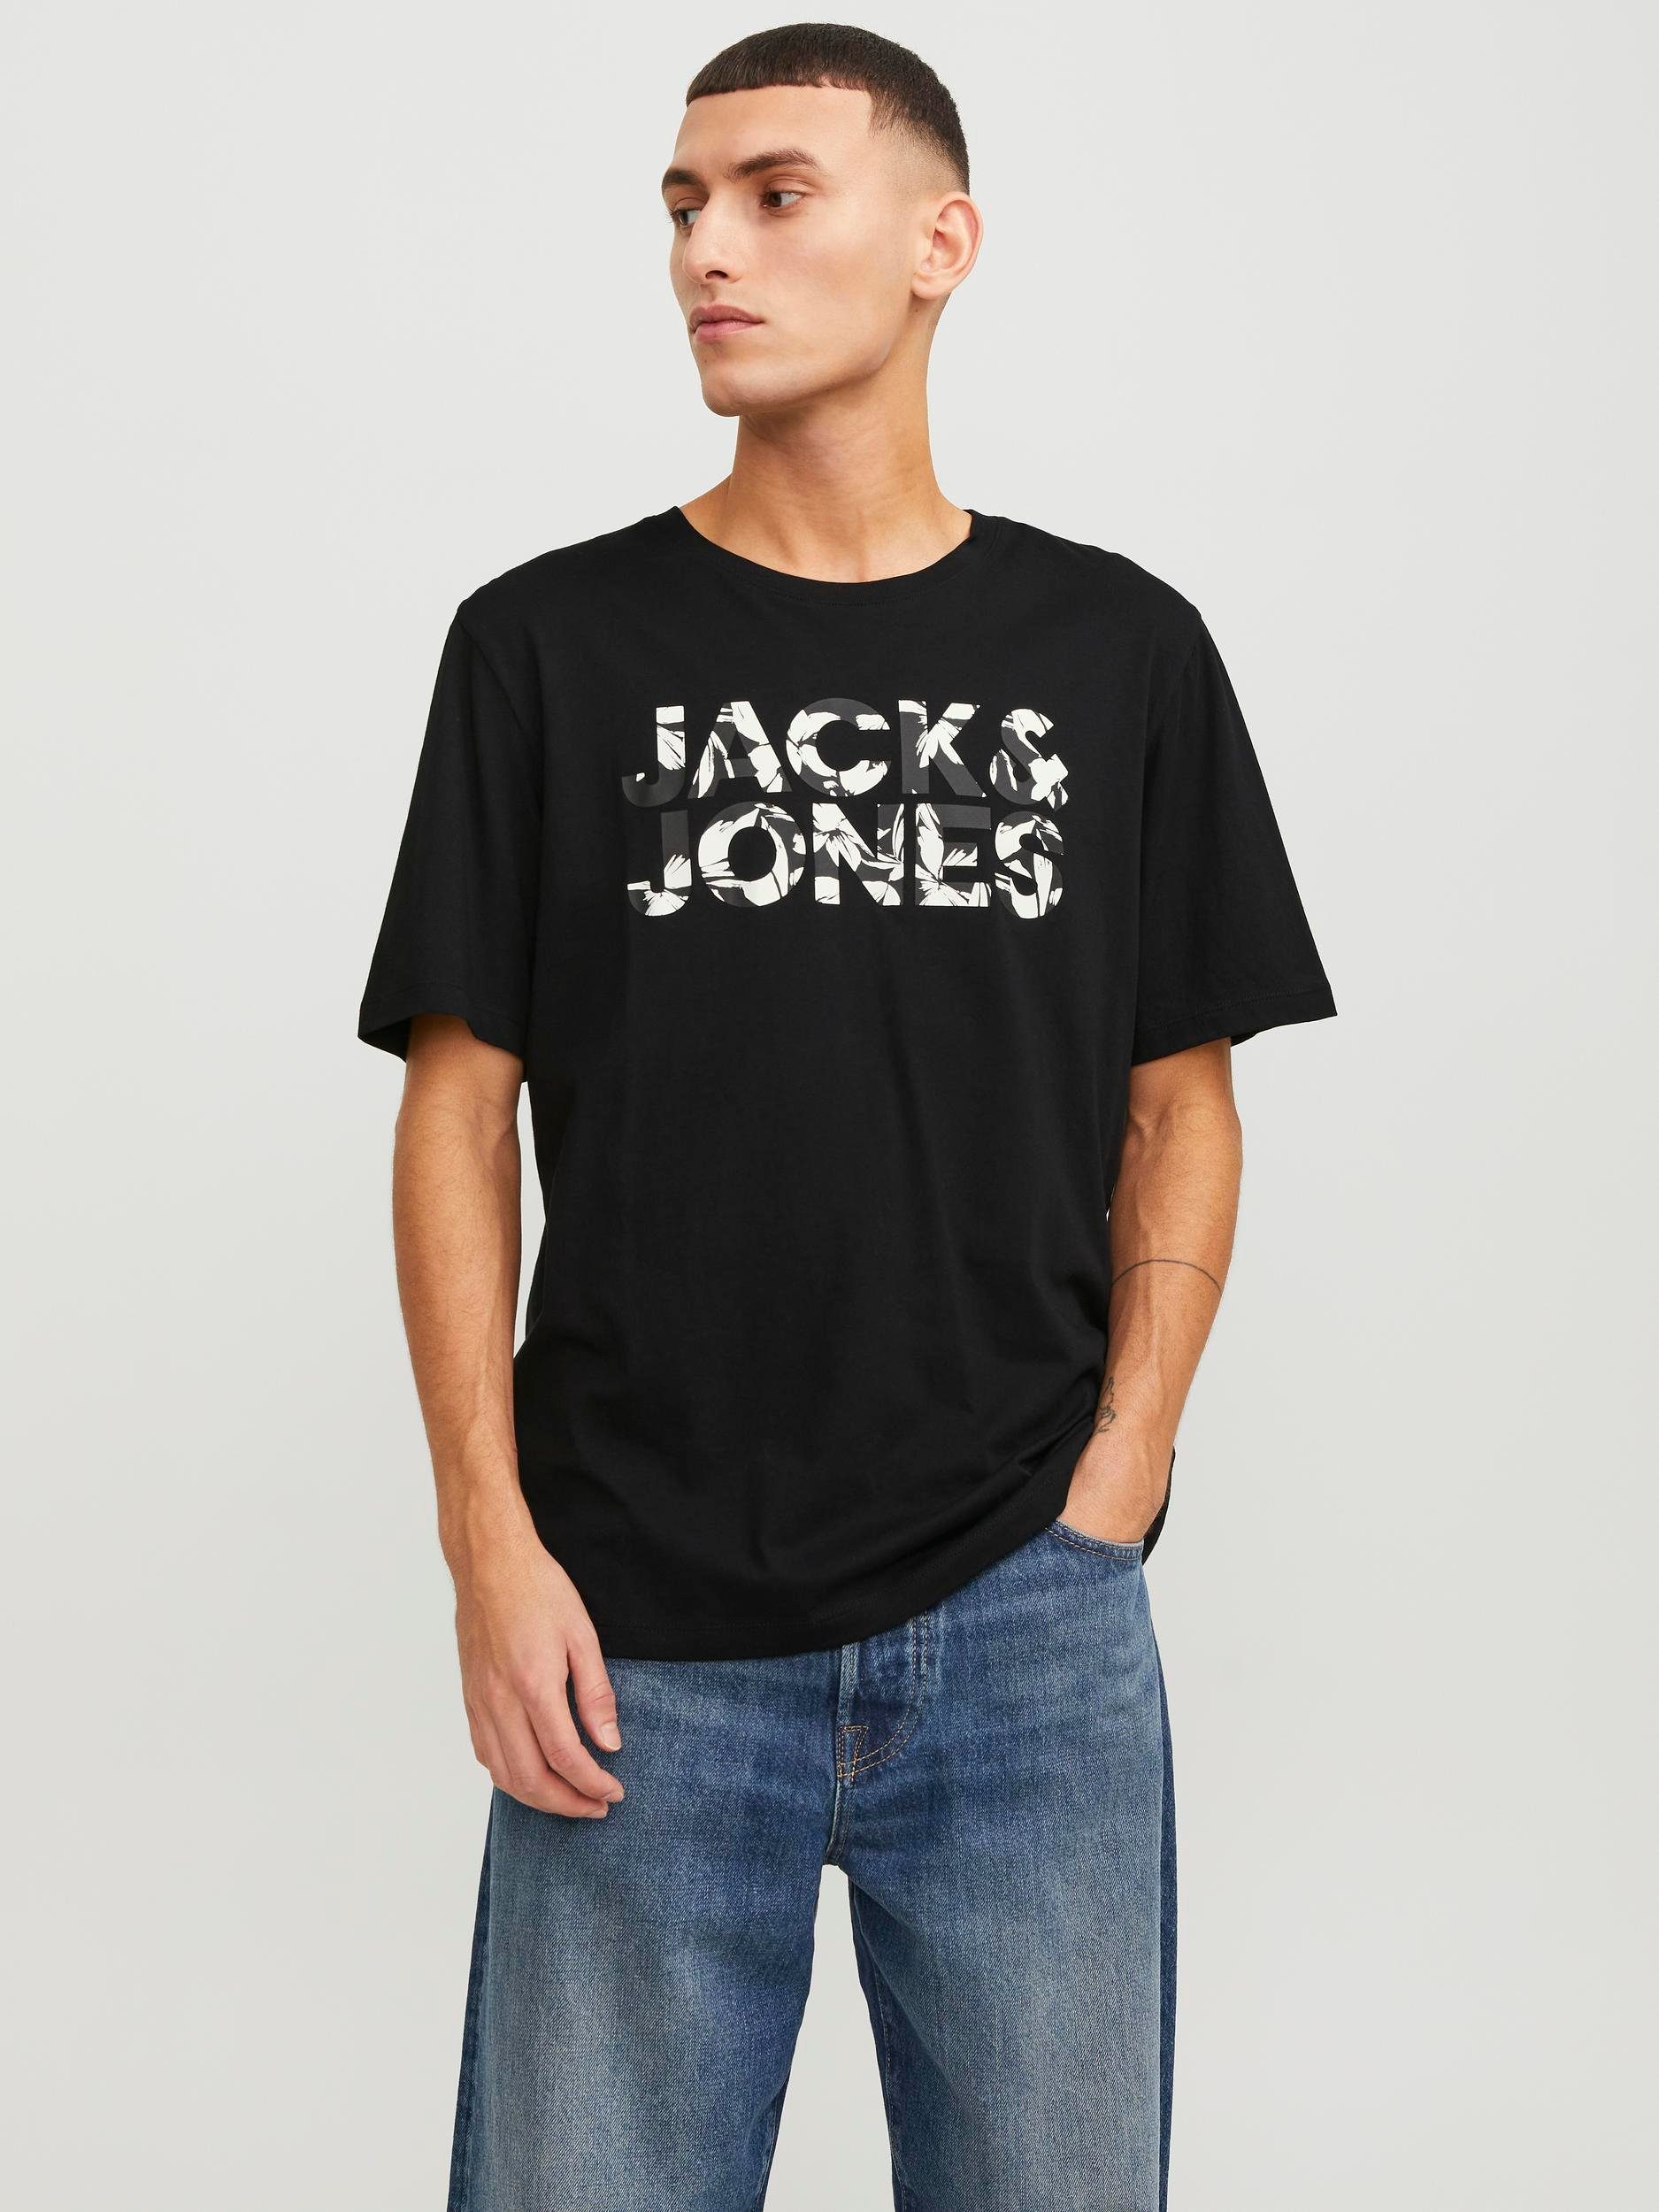 JJEJEFF & SS O-NECK CORP Jack Jones TEE Rundhalsshirt SN Black LOGO